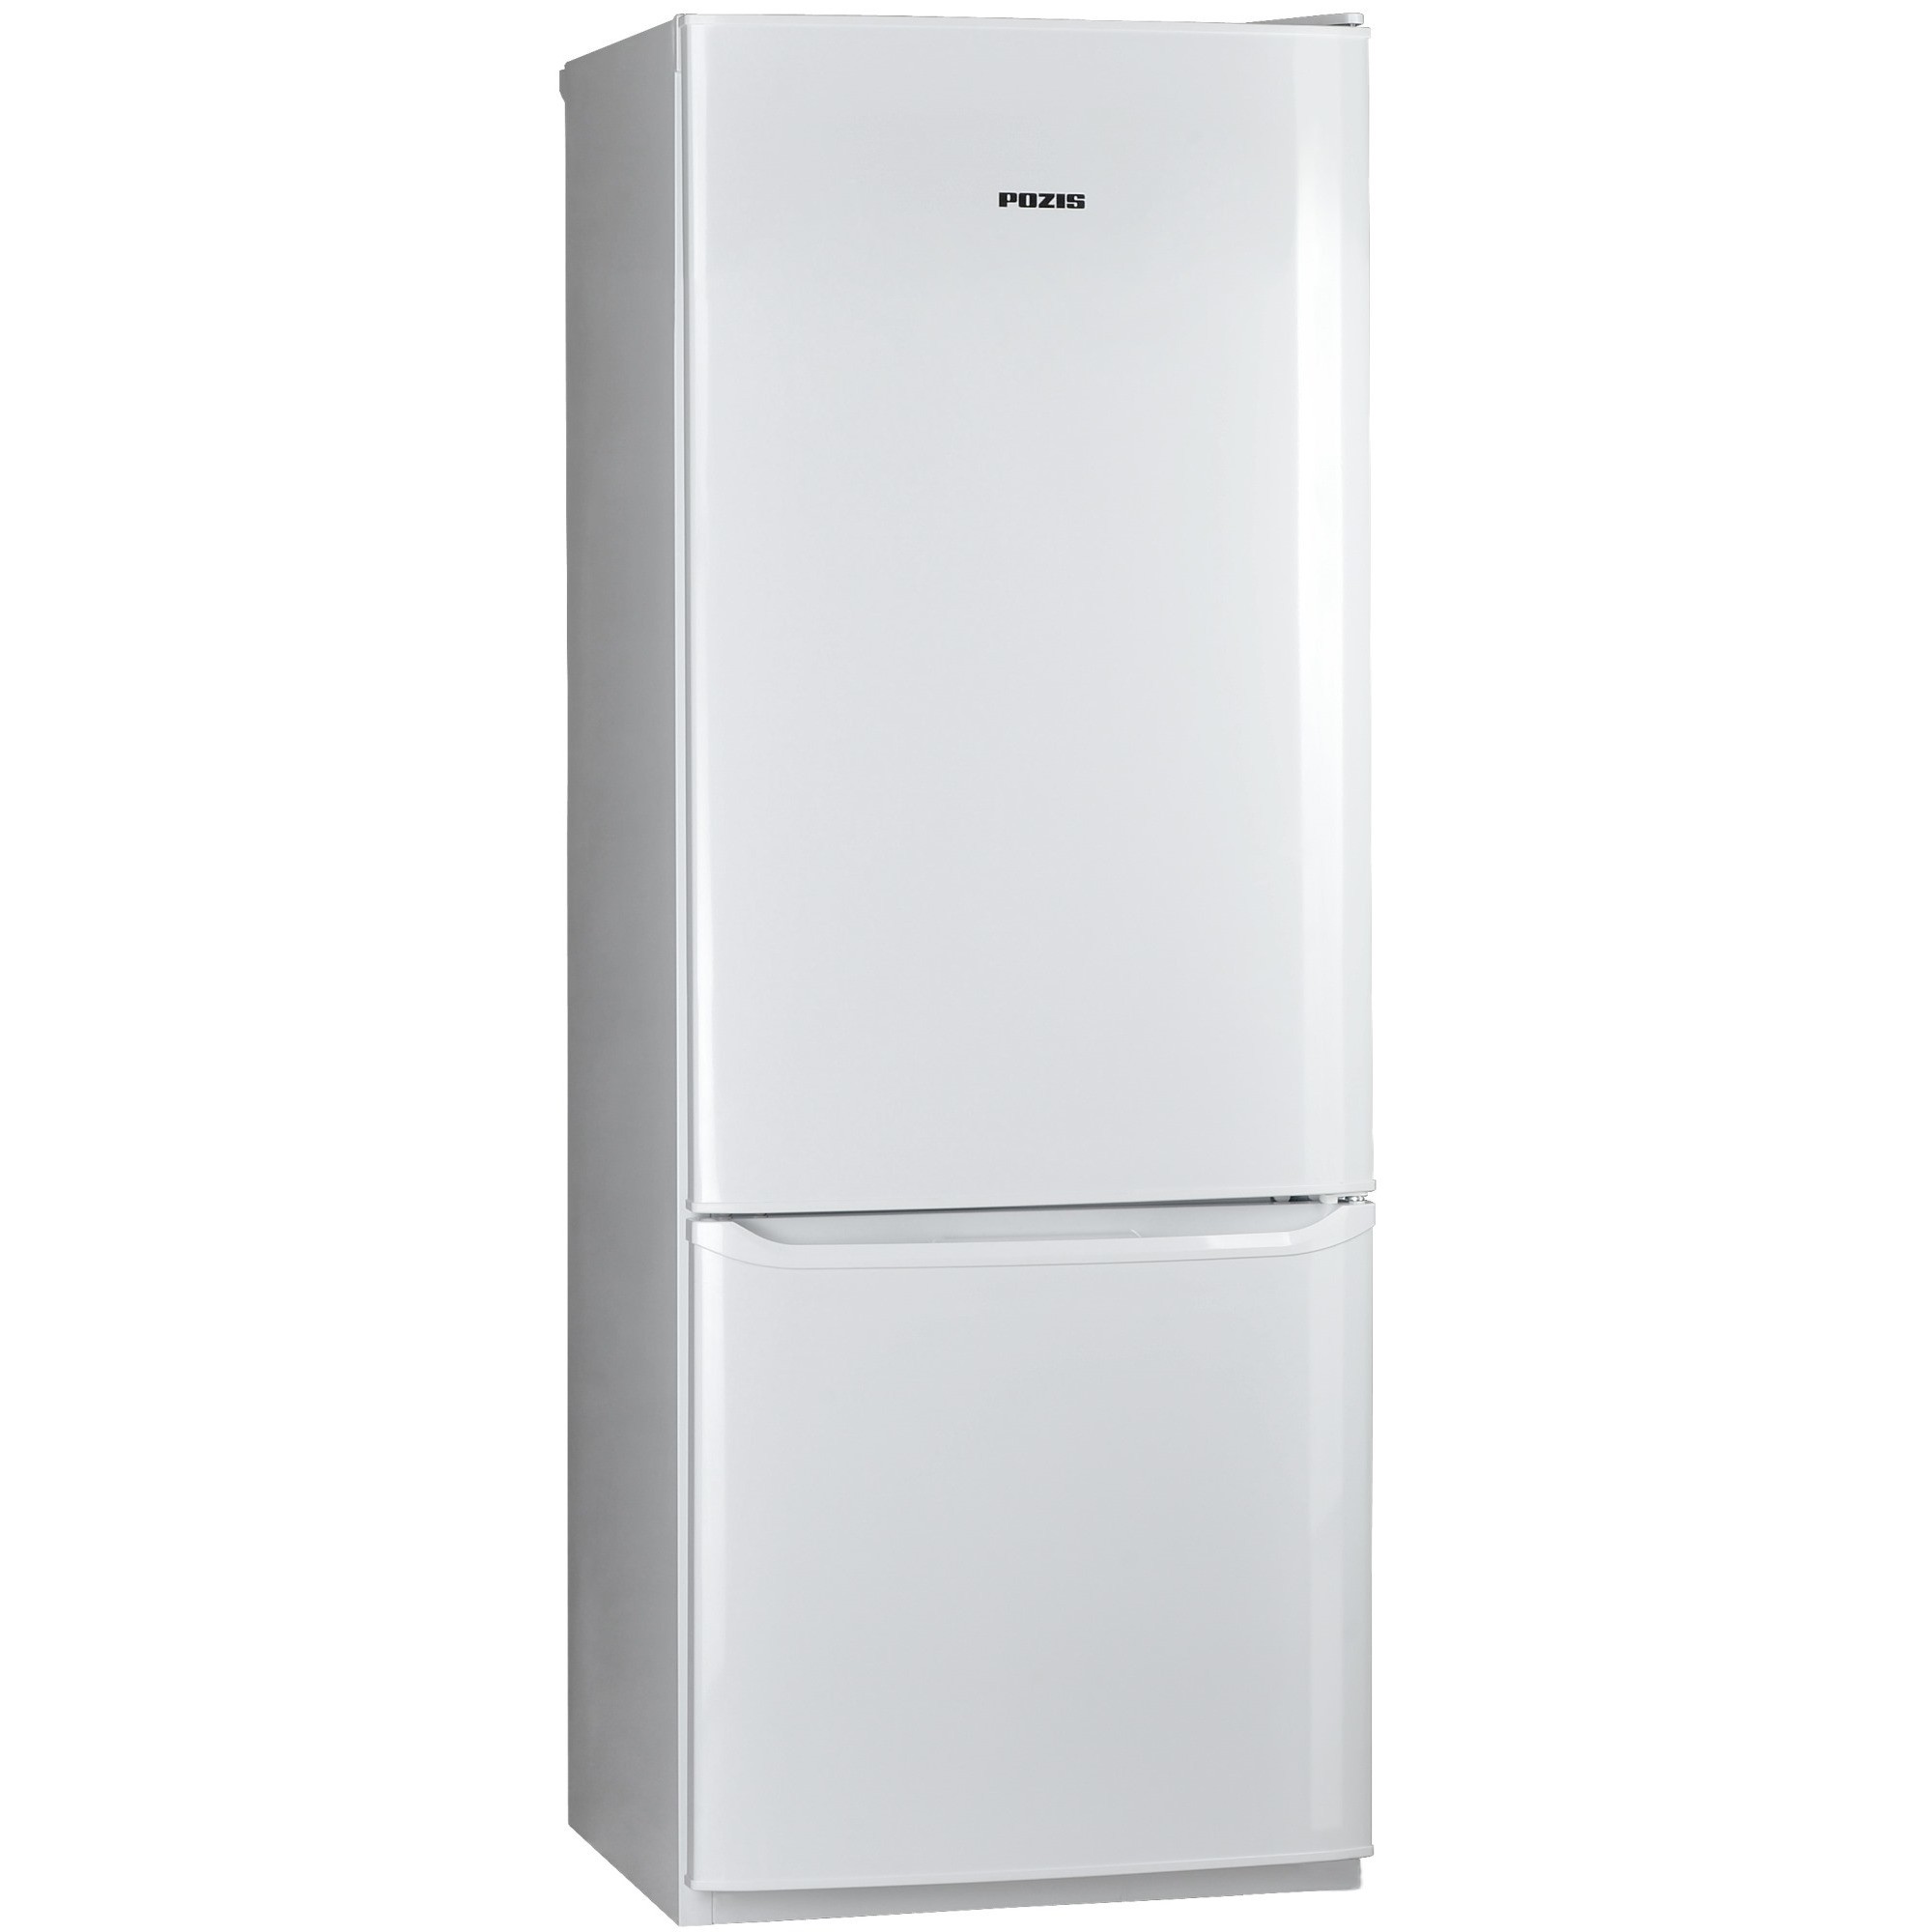 Холодильник POZIS RK-102 (графит)